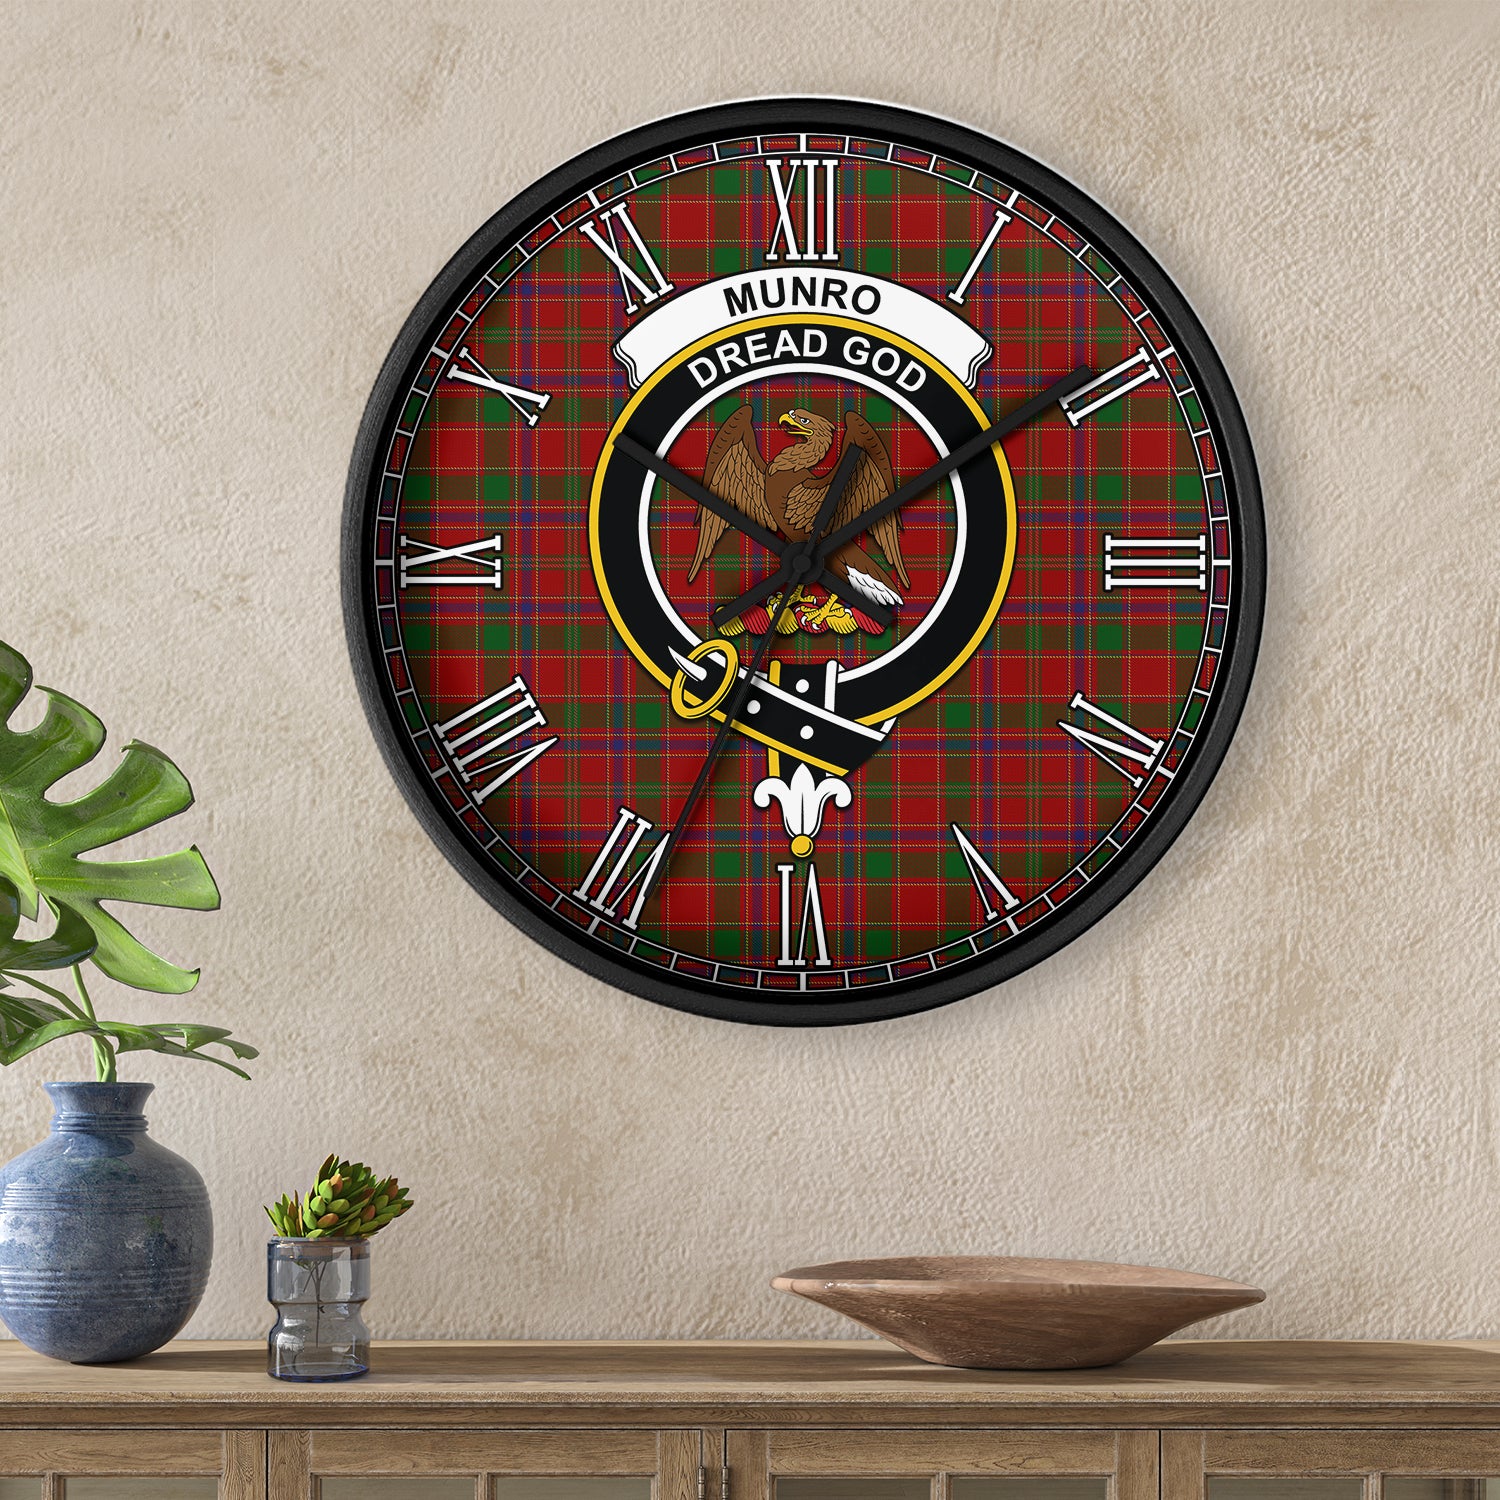 munro-tartan-wall-clock-family-crest-tartan-wall-clock